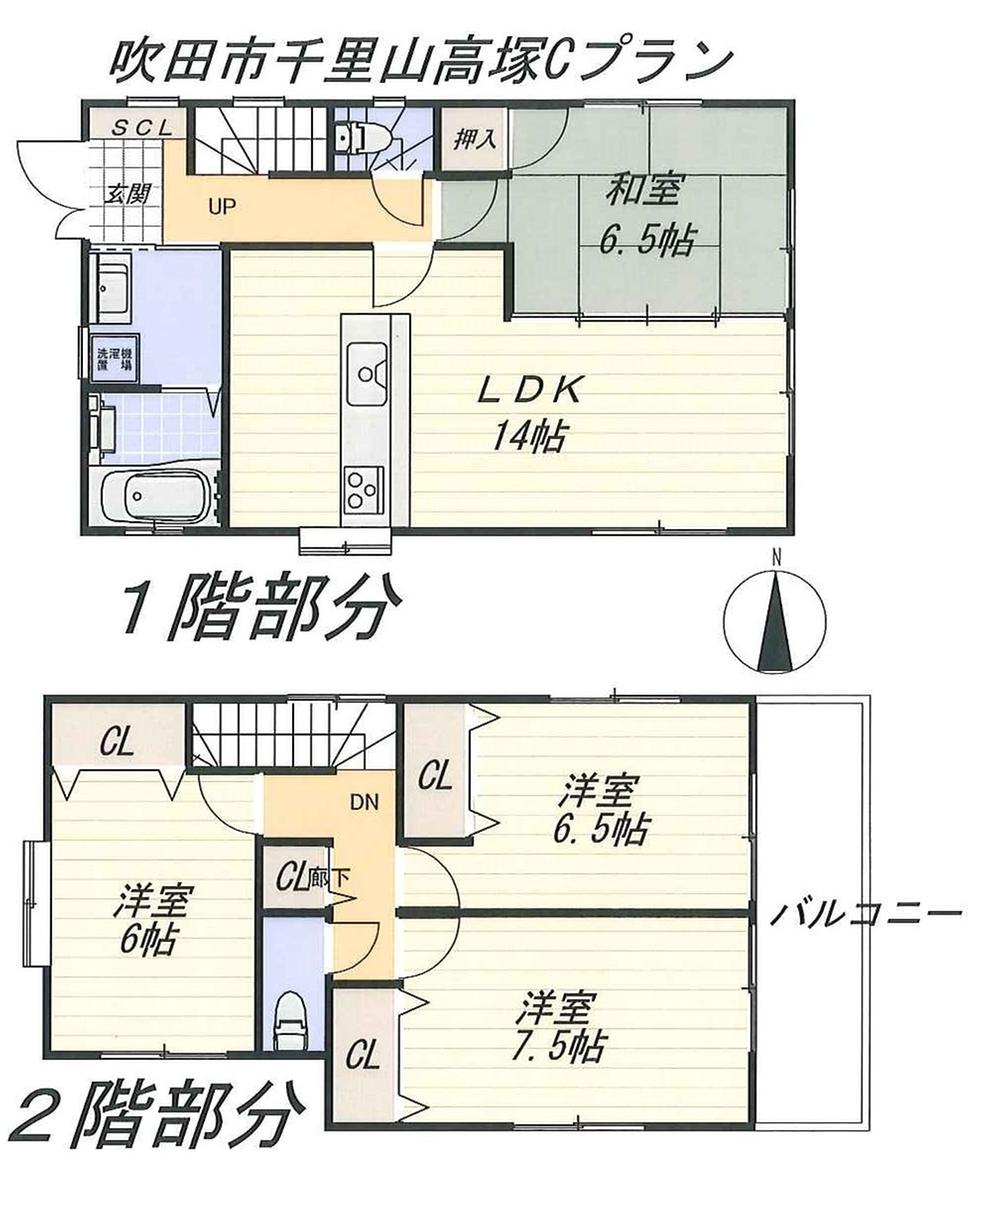 Building plan example (floor plan). Building plan C Land + building set price 28900000